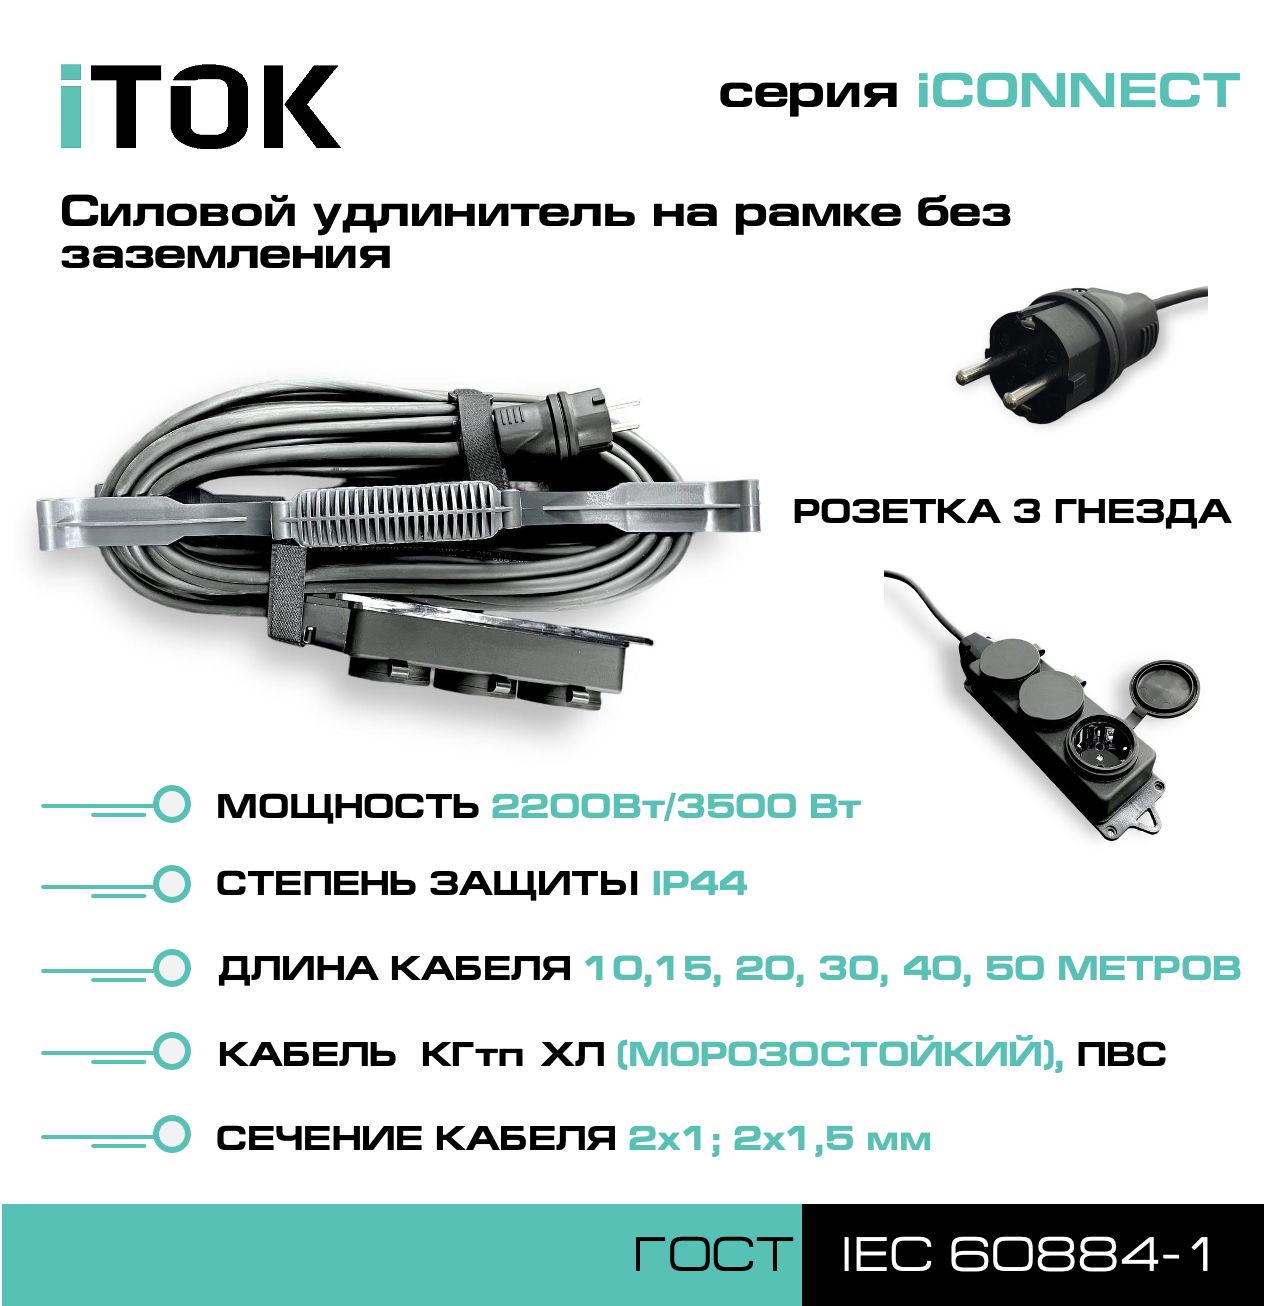 Удлинитель на рамке без земли серии iTOK iCONNECT КГтп-ХЛ 2х1,5 мм 3 гнезда IP44 40 м